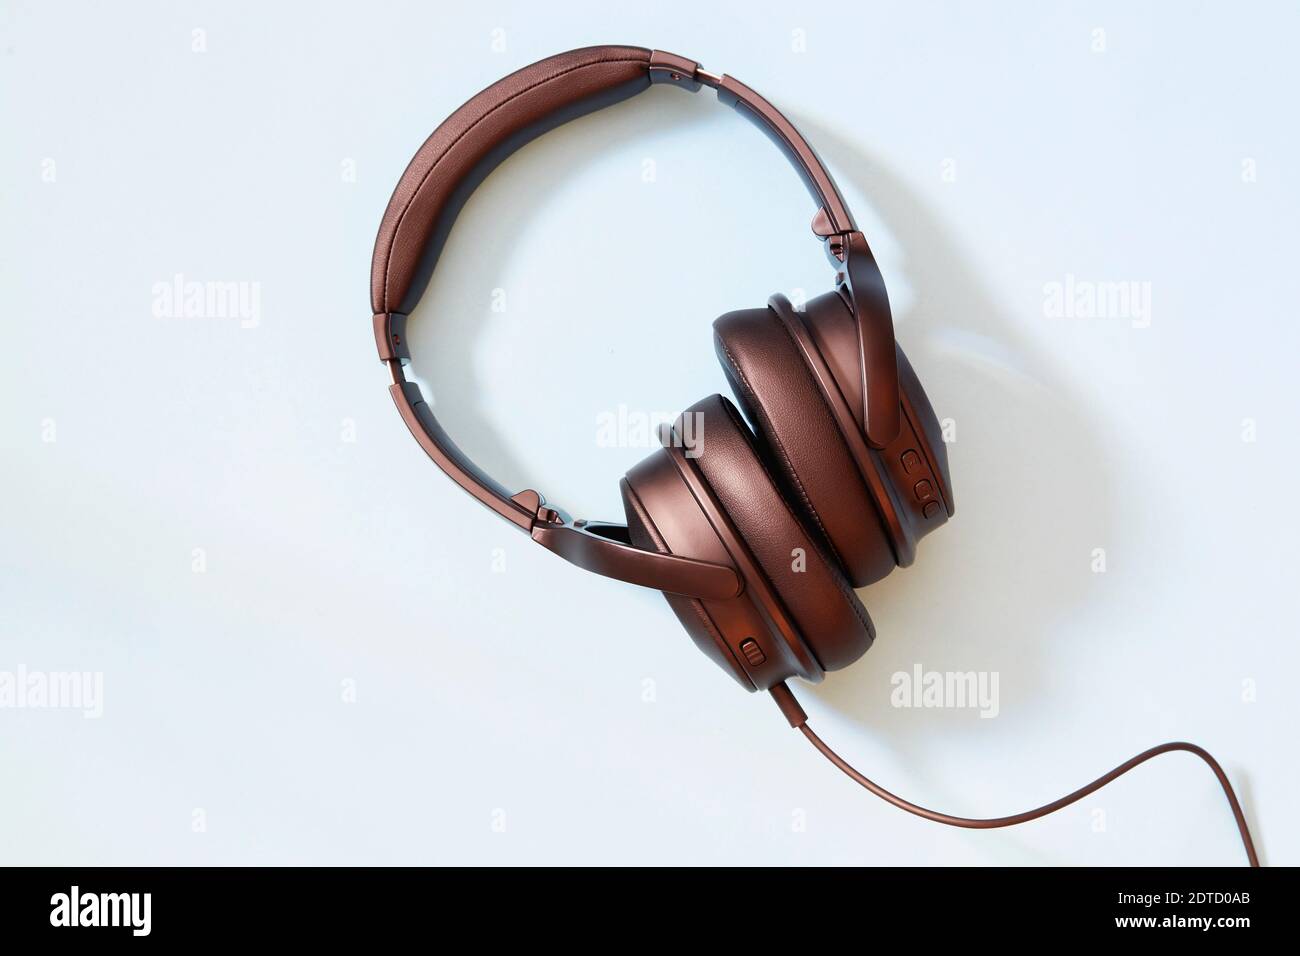 Headphones on blue background Stock Photo